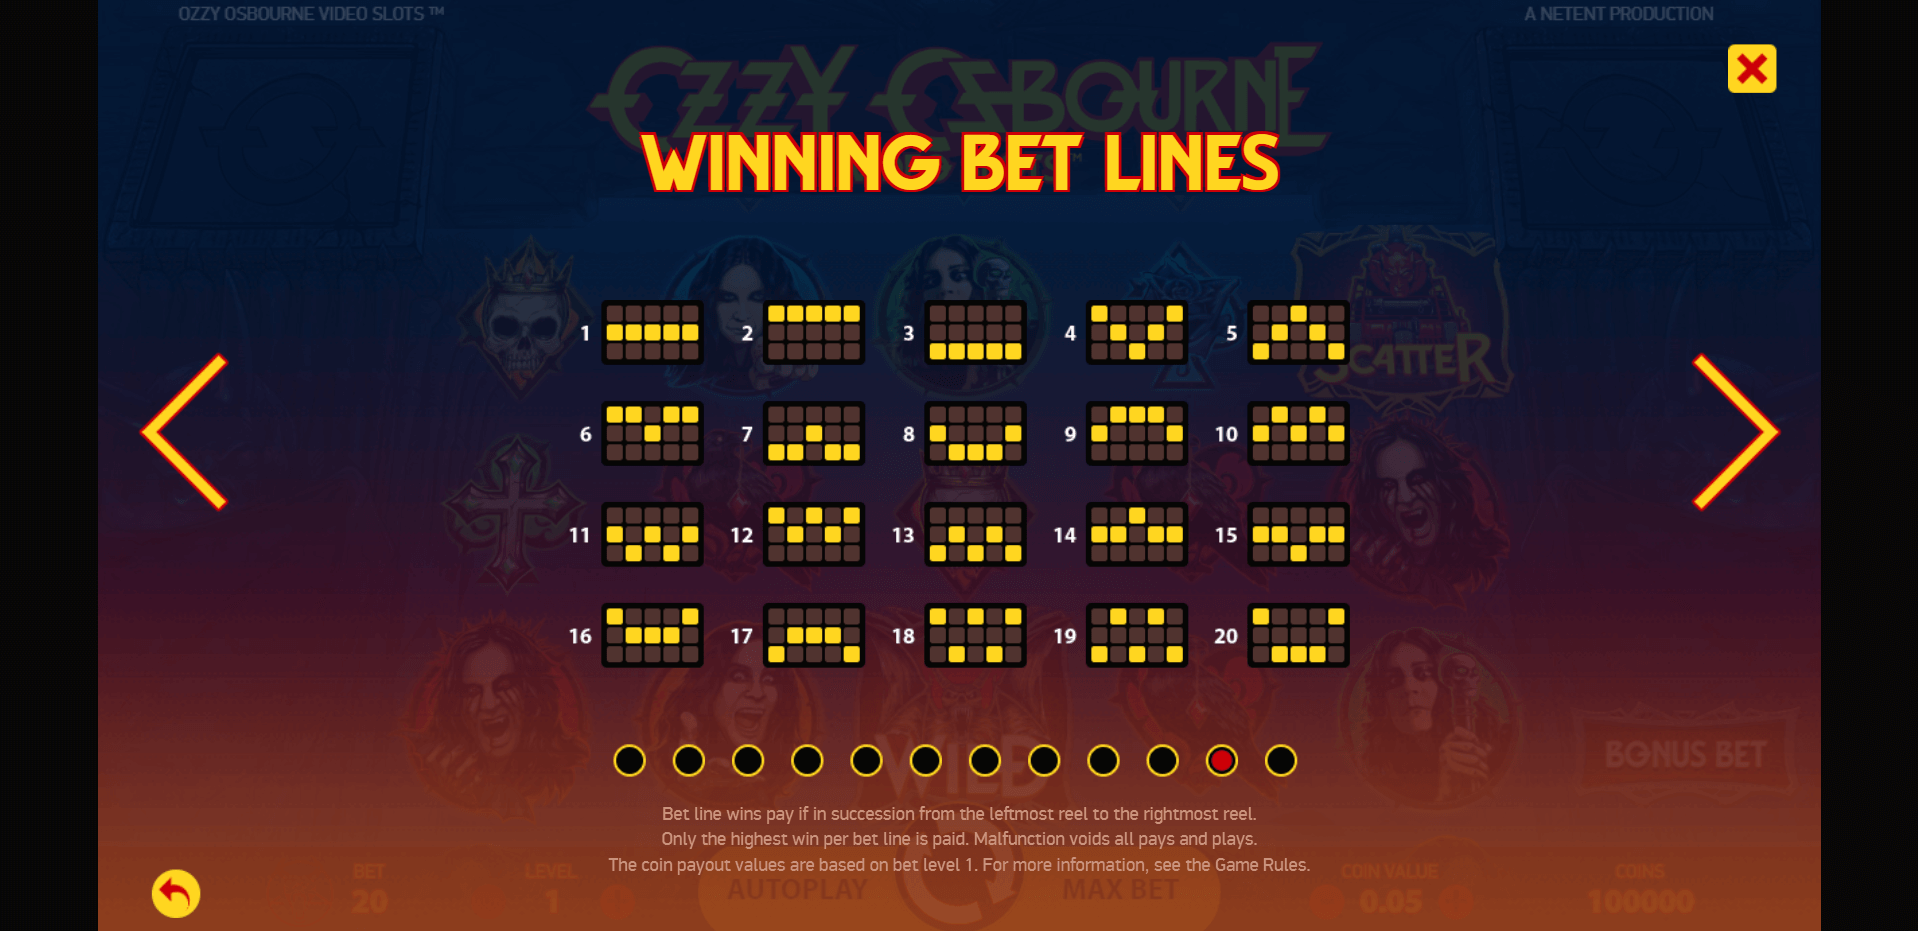 ozzy osbourne slot machine detail image 9